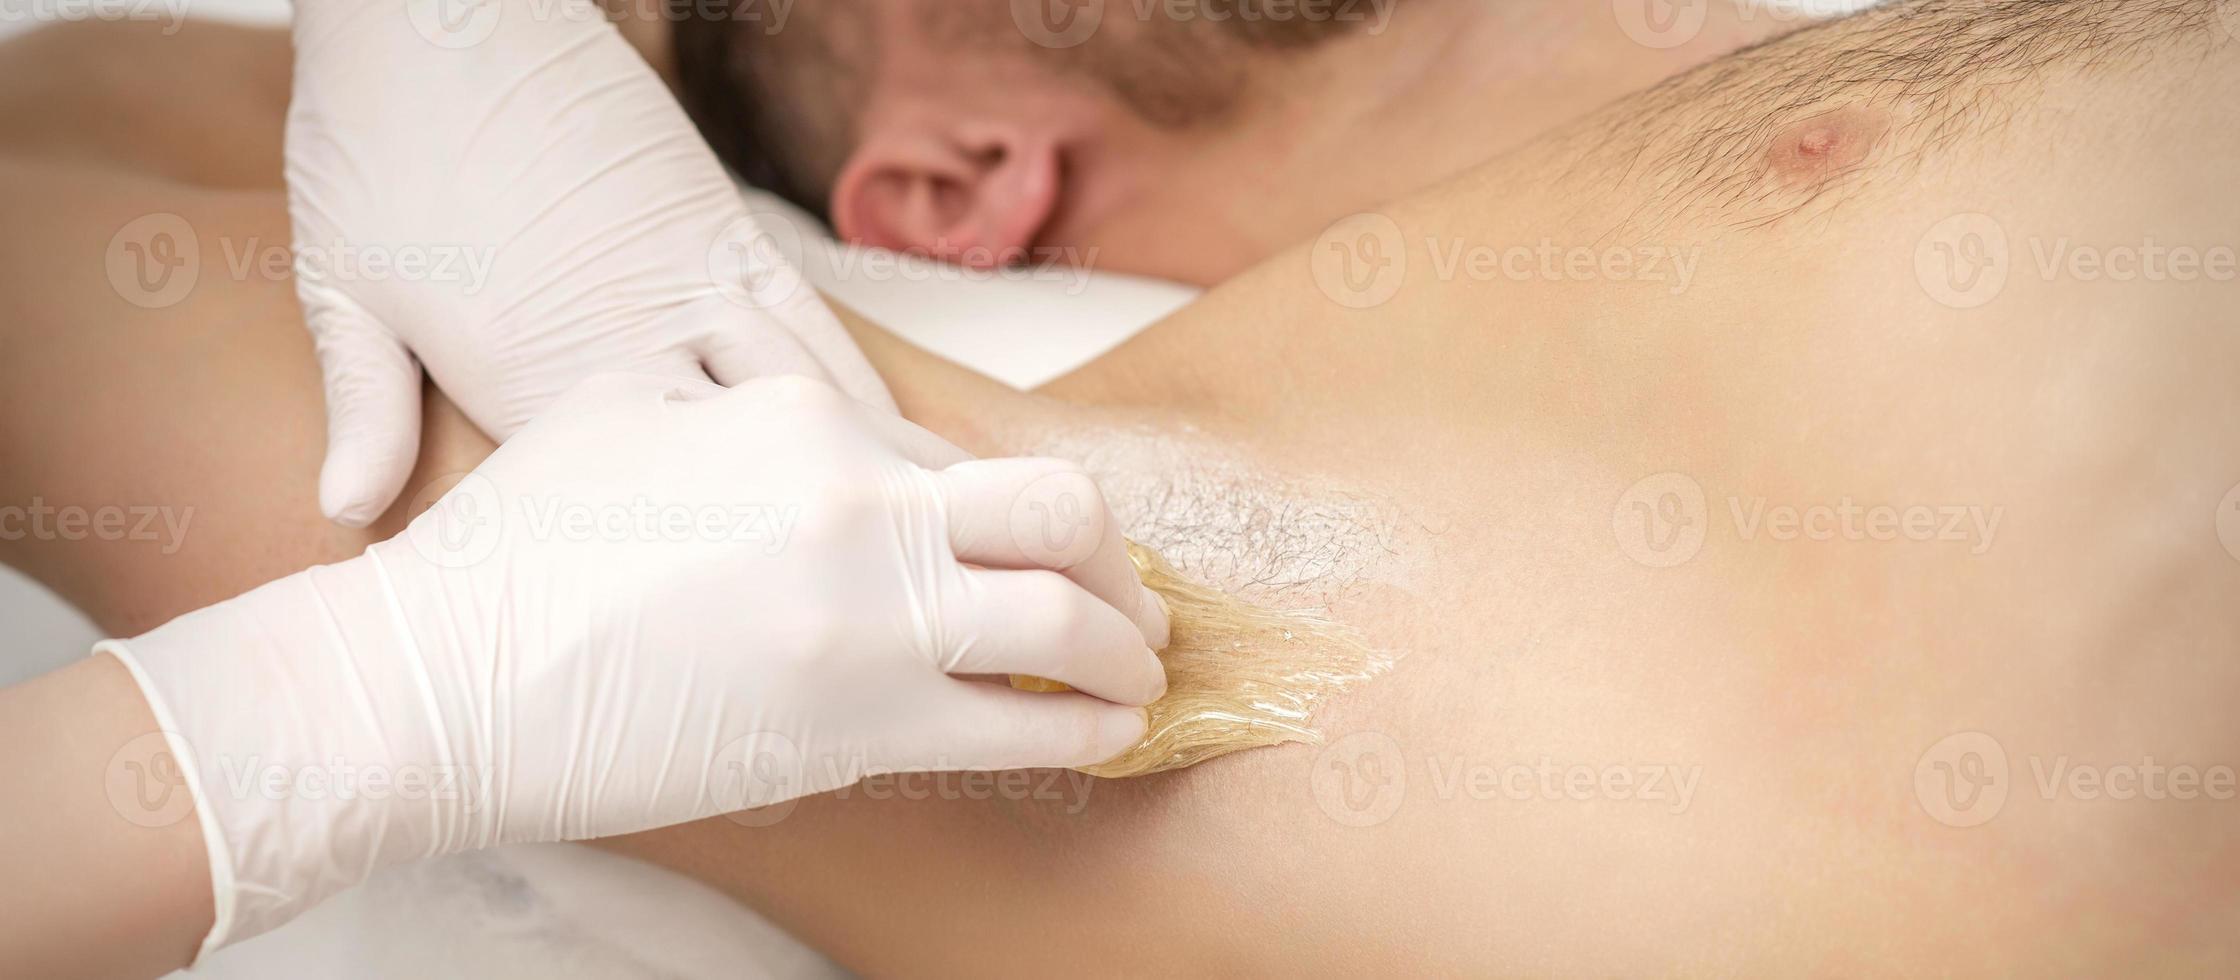 Beautician waxing young male armpit photo